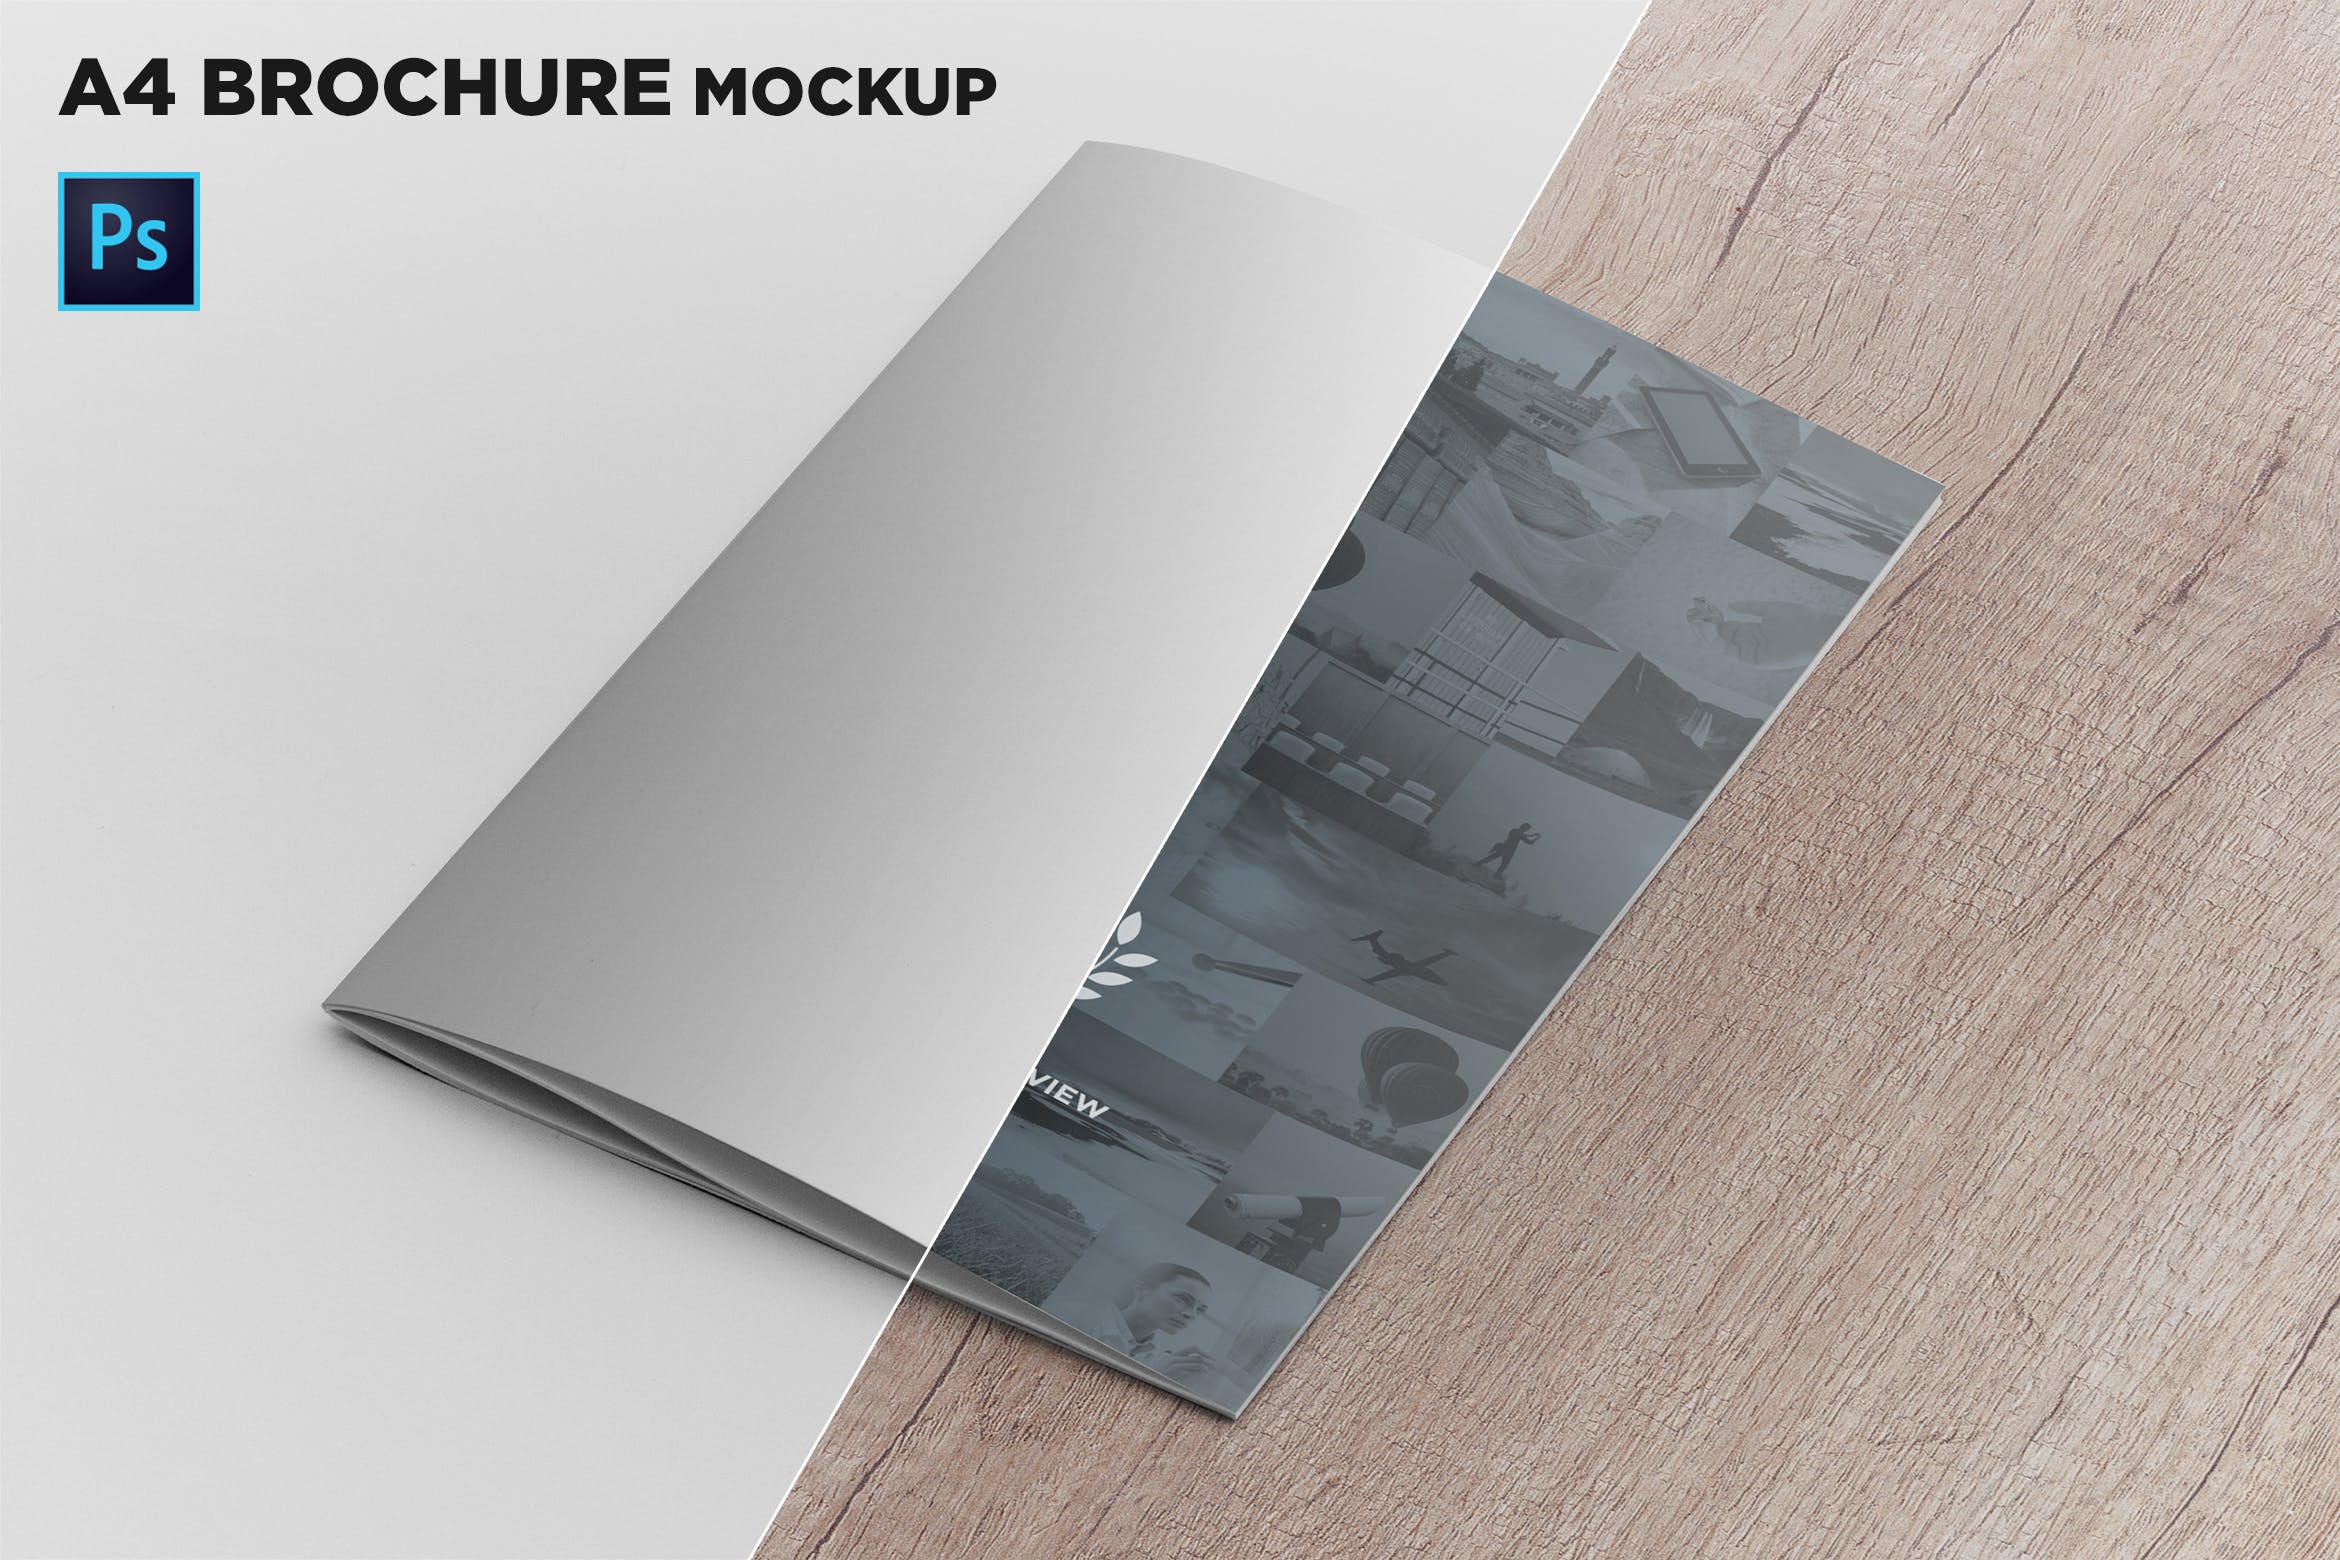 A4尺寸企业/品牌宣传册封面效果图样机素材库精选模板 A4 Brochure Cover Mockup Perspective View插图